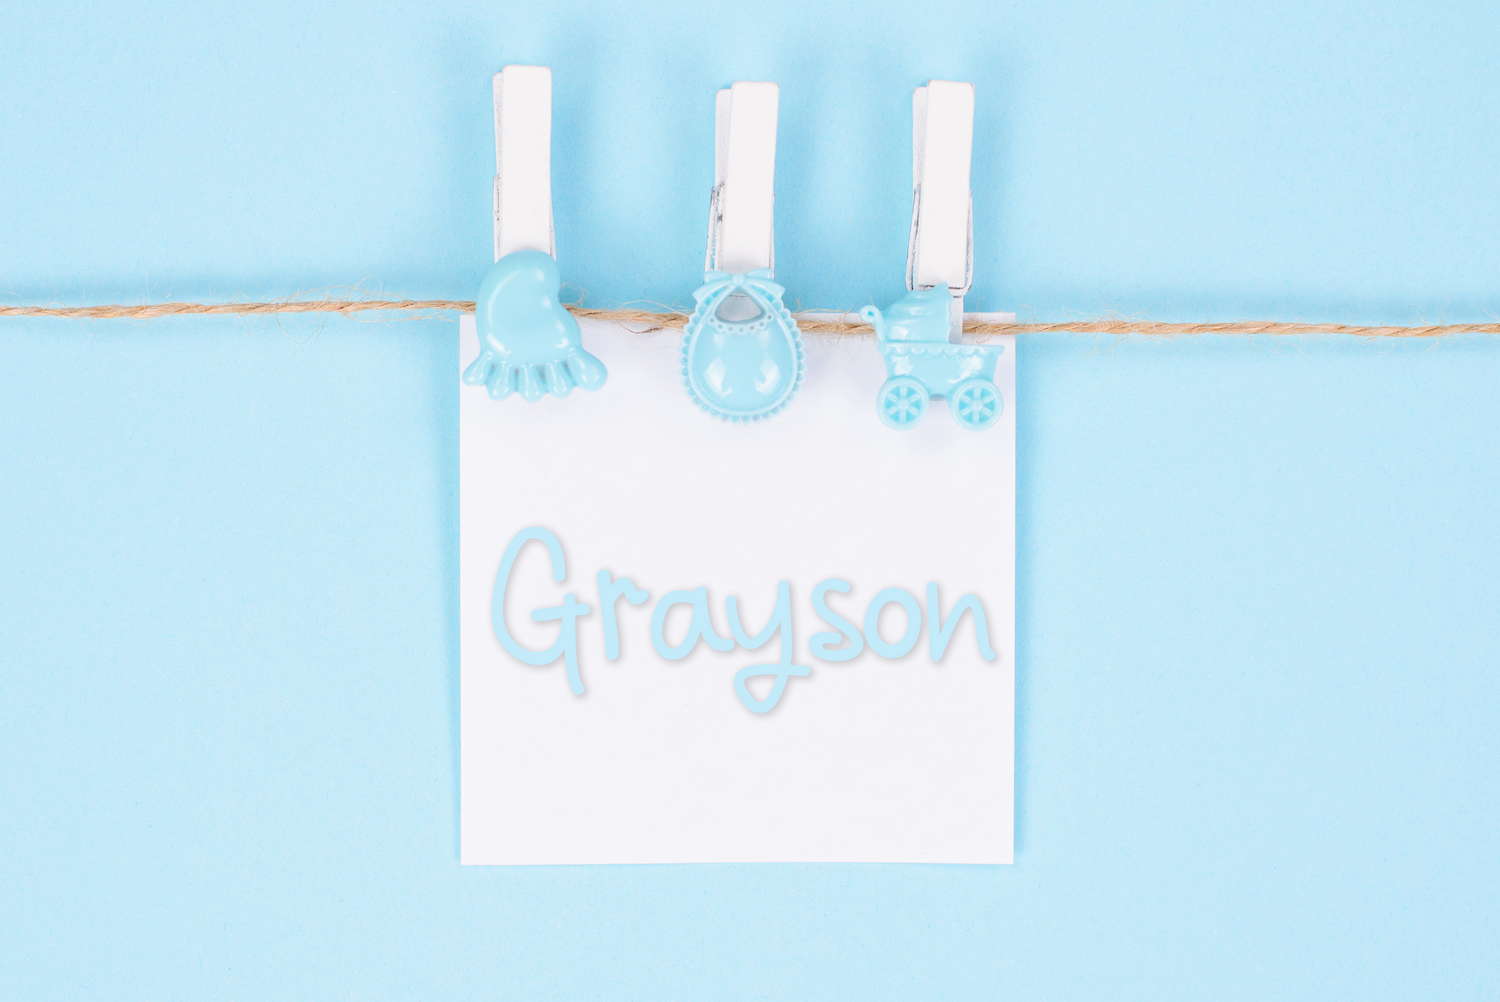 Grayson Baby Name